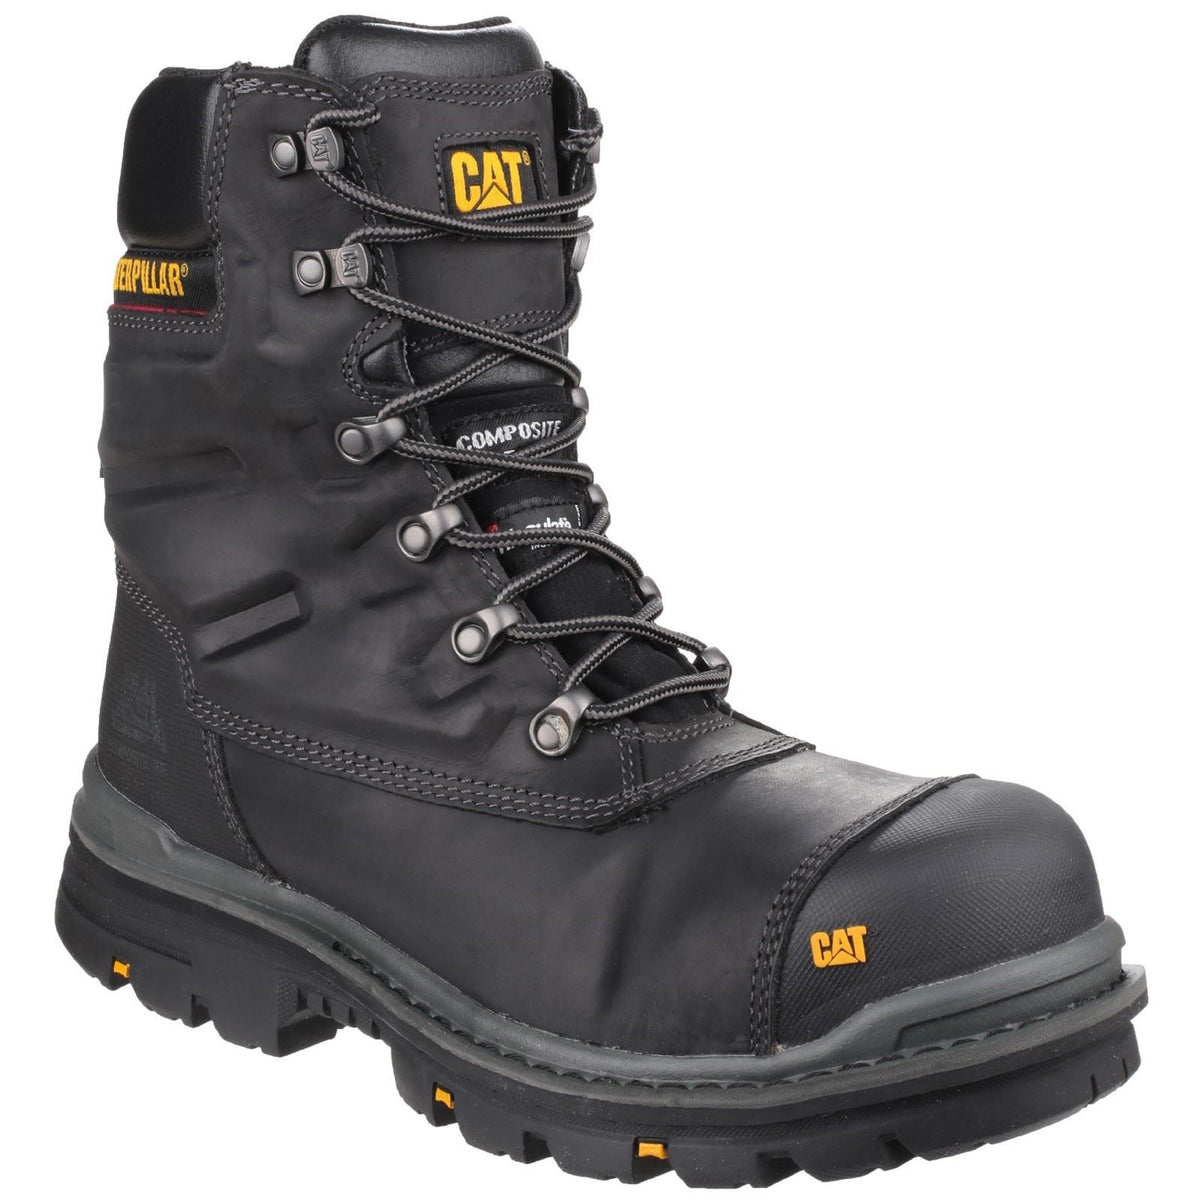 Caterpillar Premier Waterproof Safety Boots